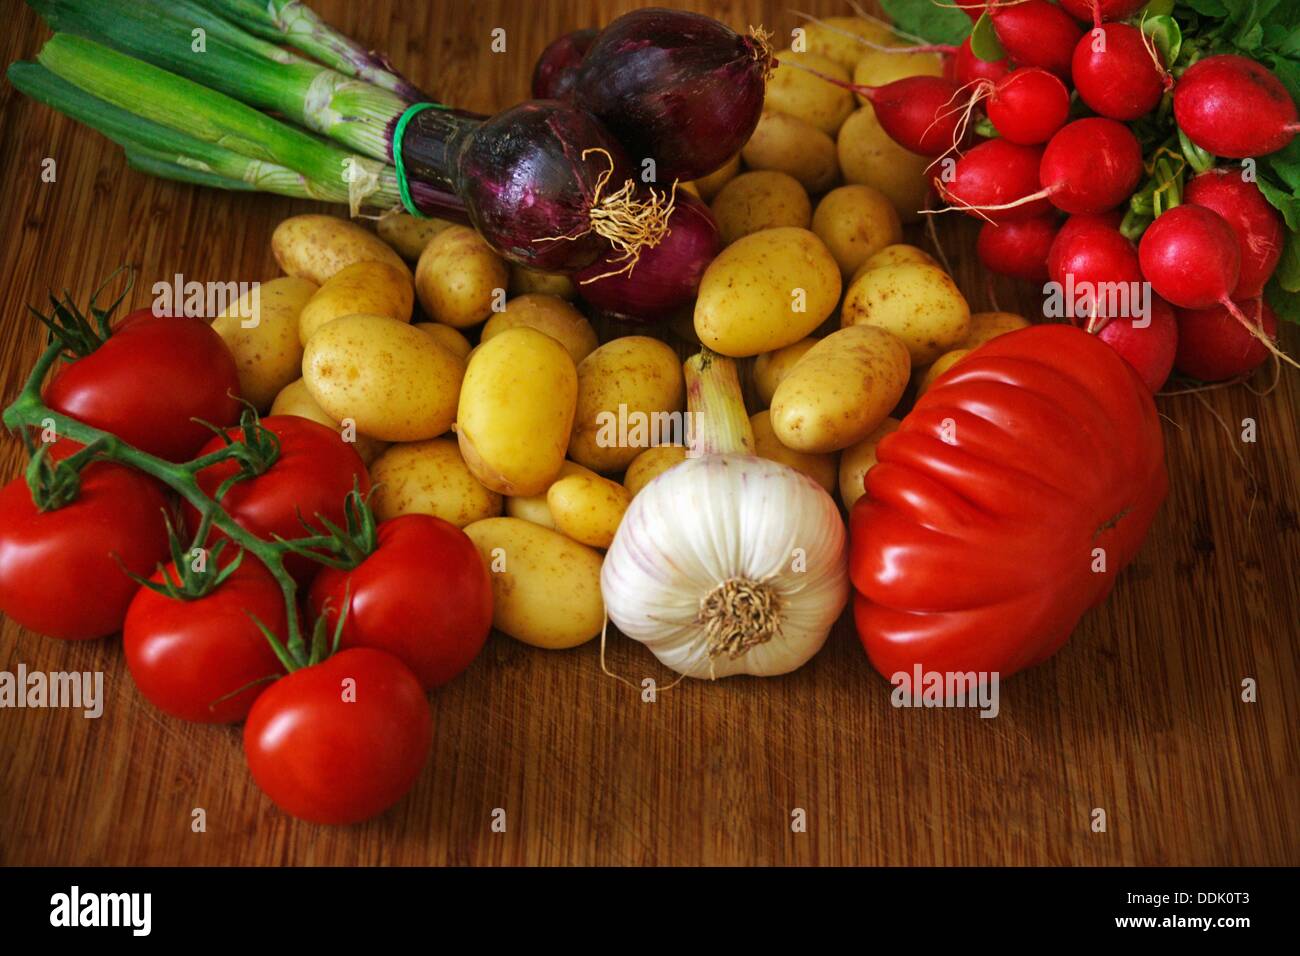 Vegetables: tomatoes, potatoes, garlic, oignons, etc. Stock Photo